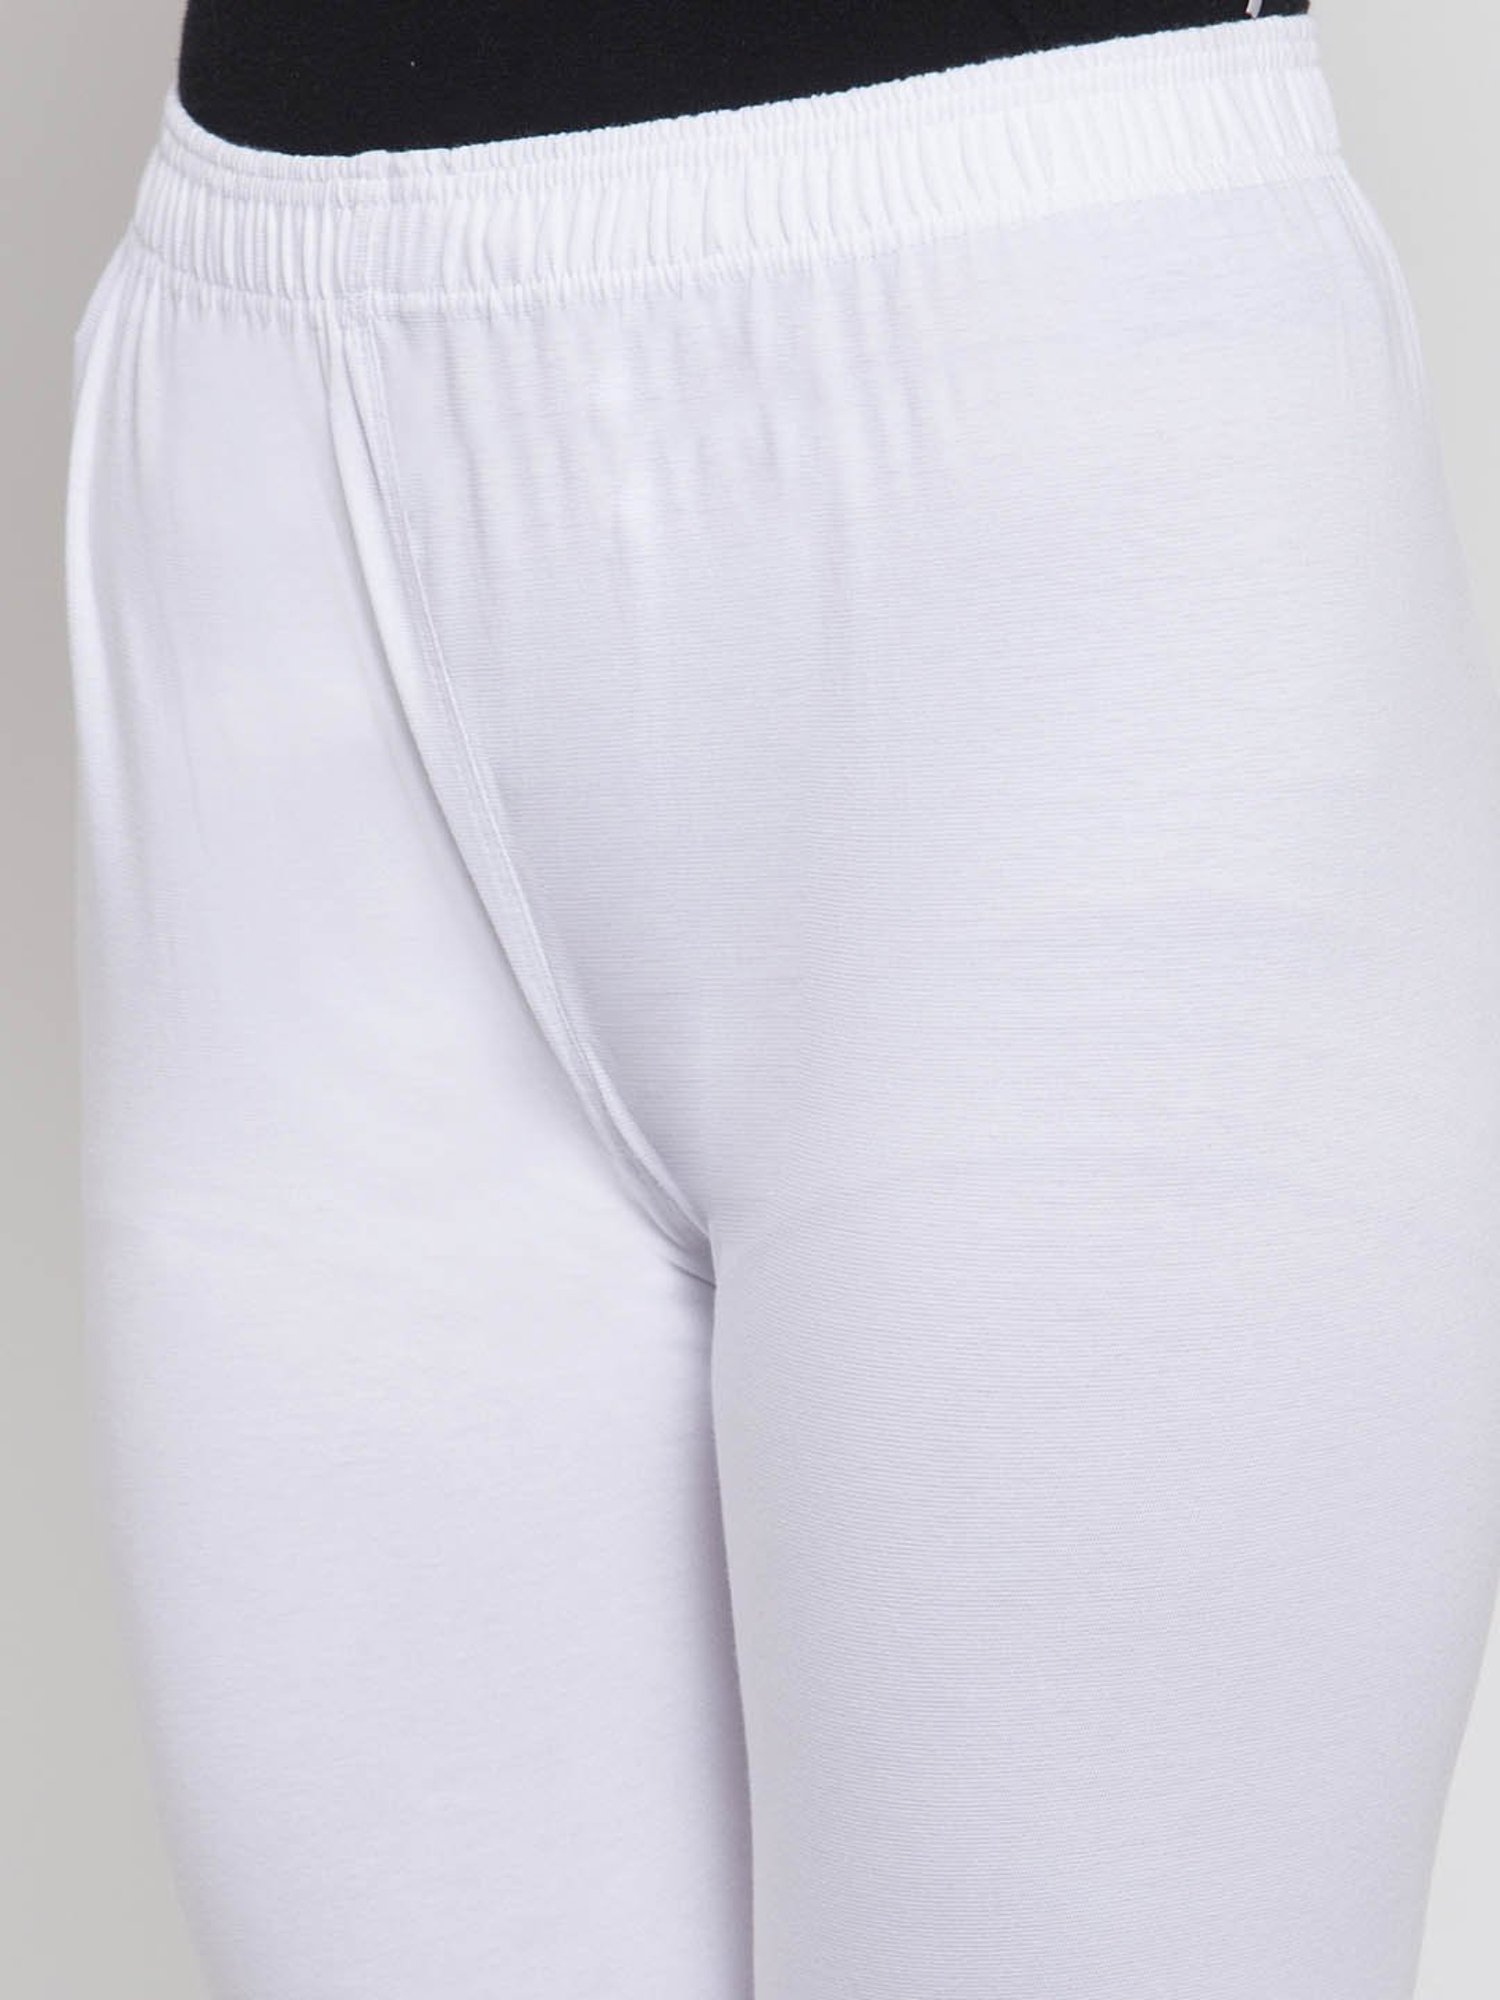 ZERDOCEAN Women's Plus Size 100% Cotton Fleece Lining Leggings Pant Black  3X at Amazon Women's Clothing store